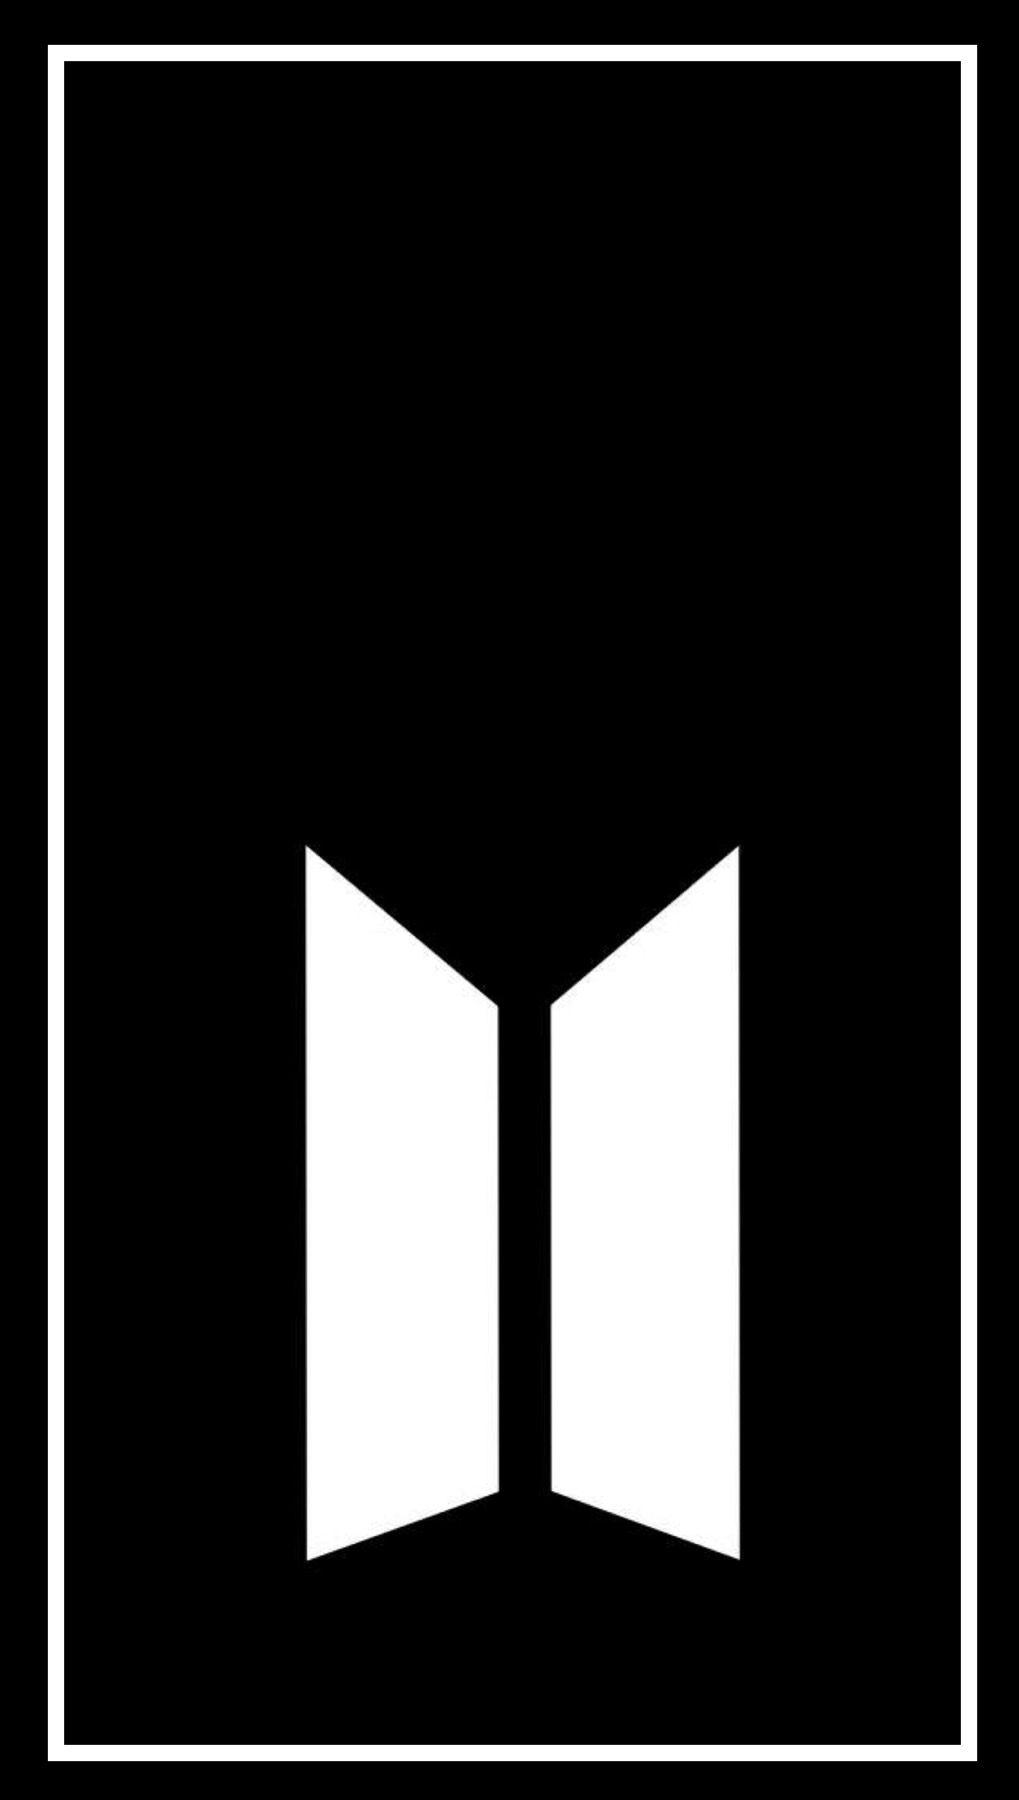  BTS  Logo  Wallpapers  Top Free BTS  Logo  Backgrounds  